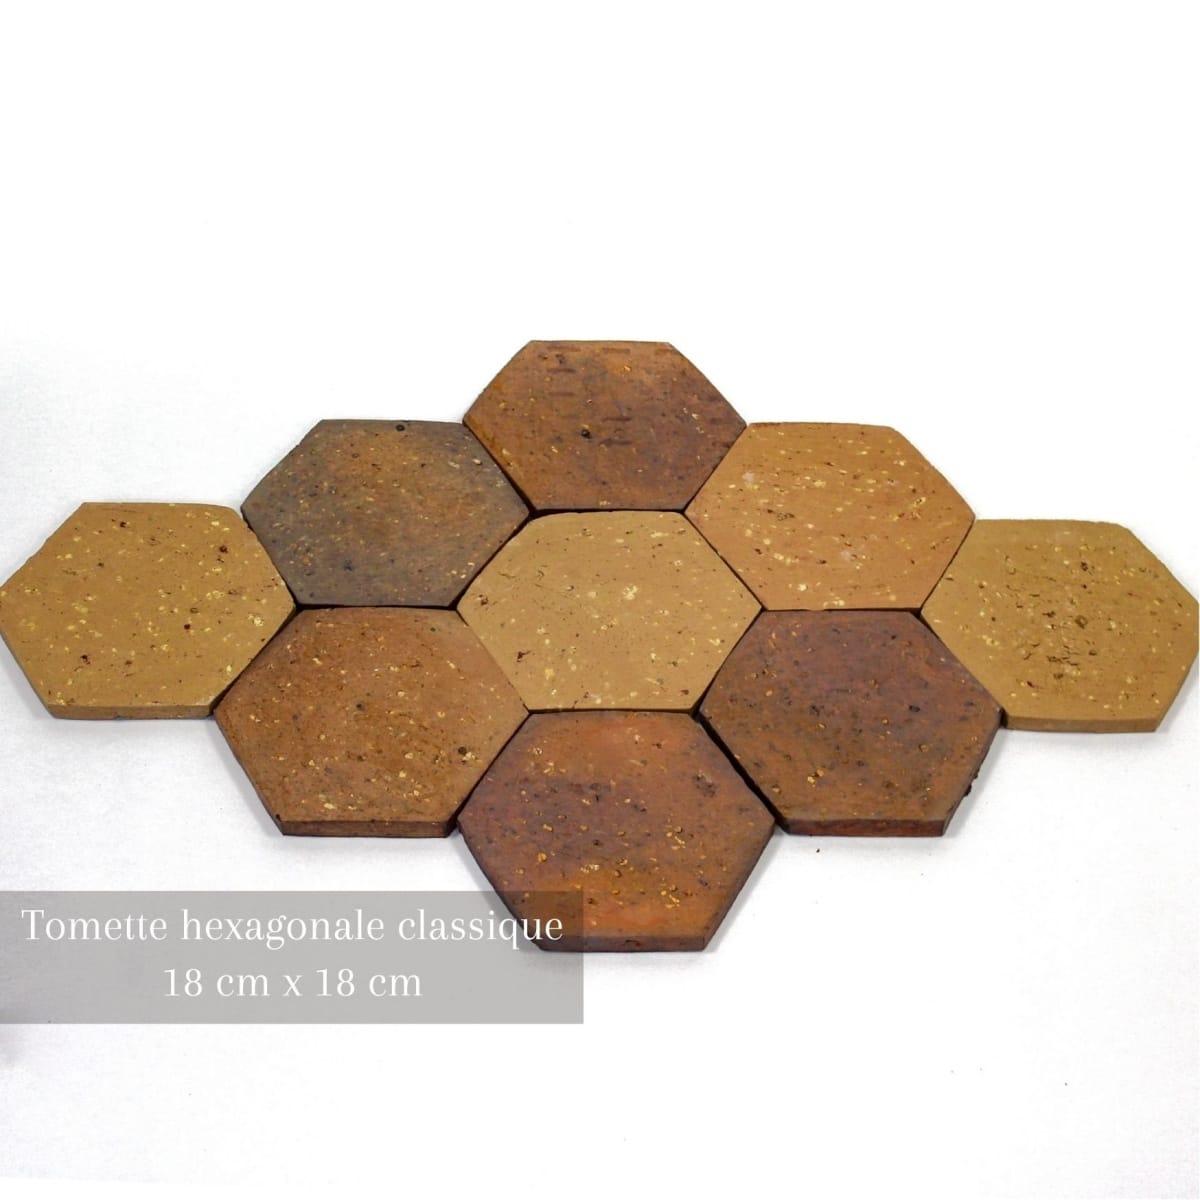 tomette hexagonale classique 3